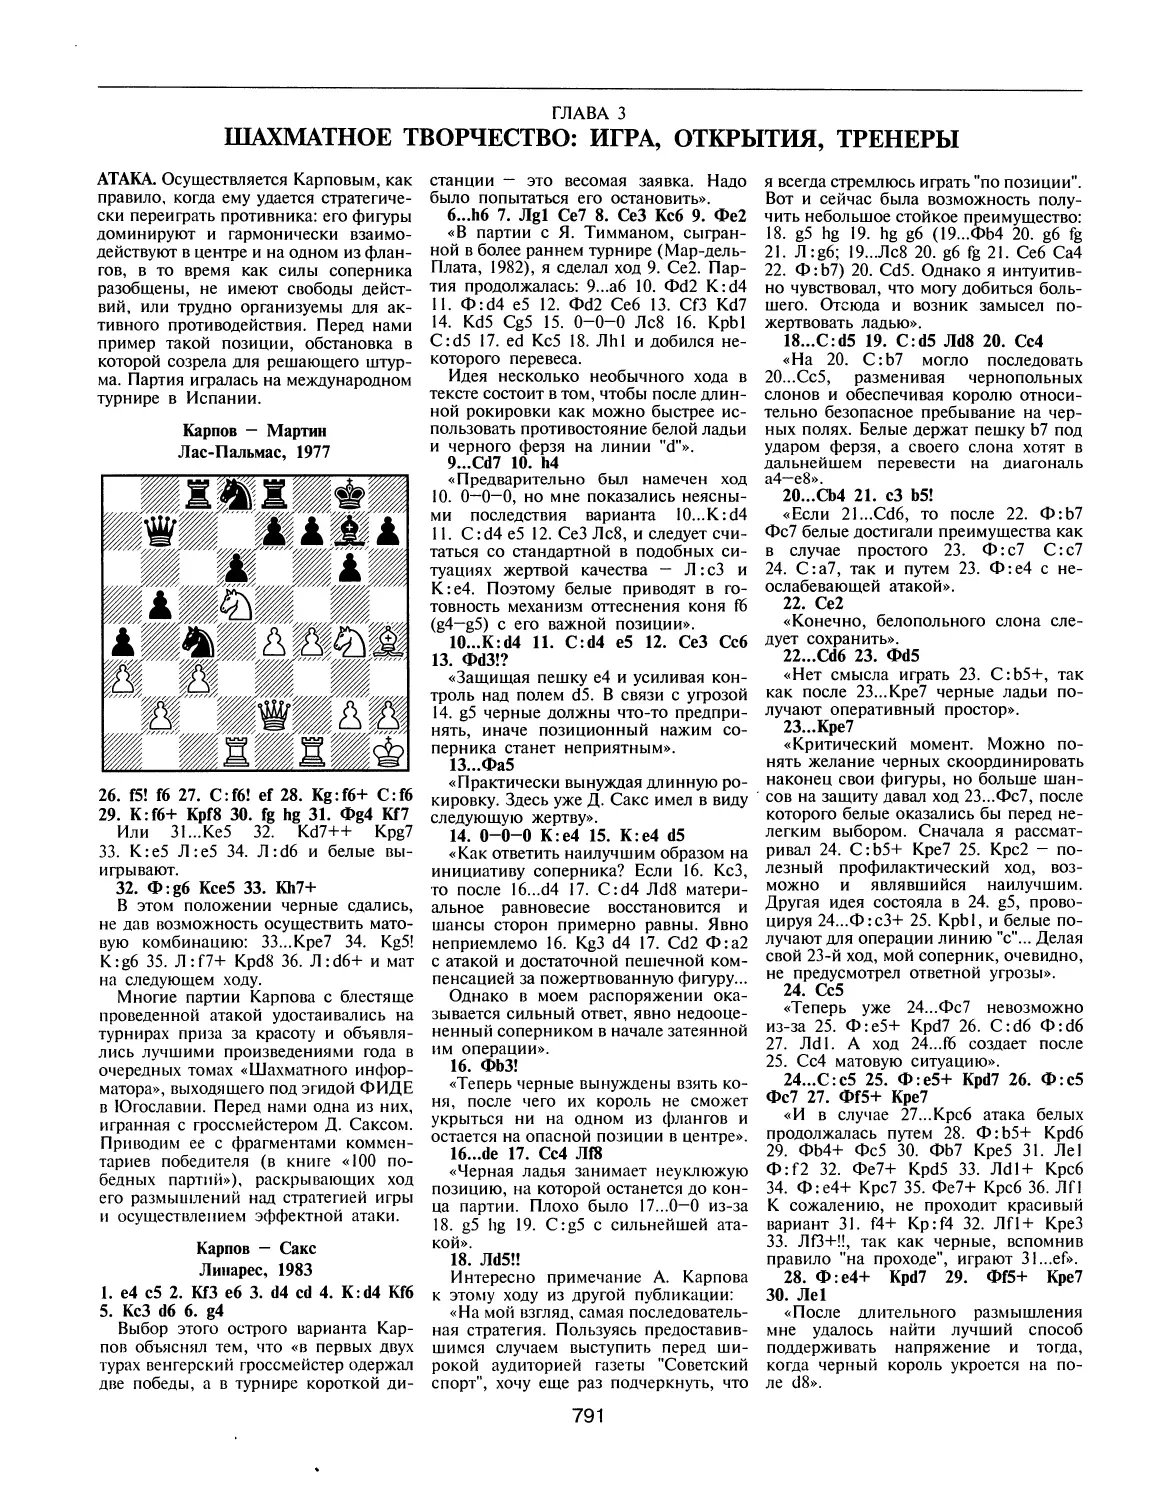 ГЛАВА 3. Шахматное творчество: игра, открытия, тренеры